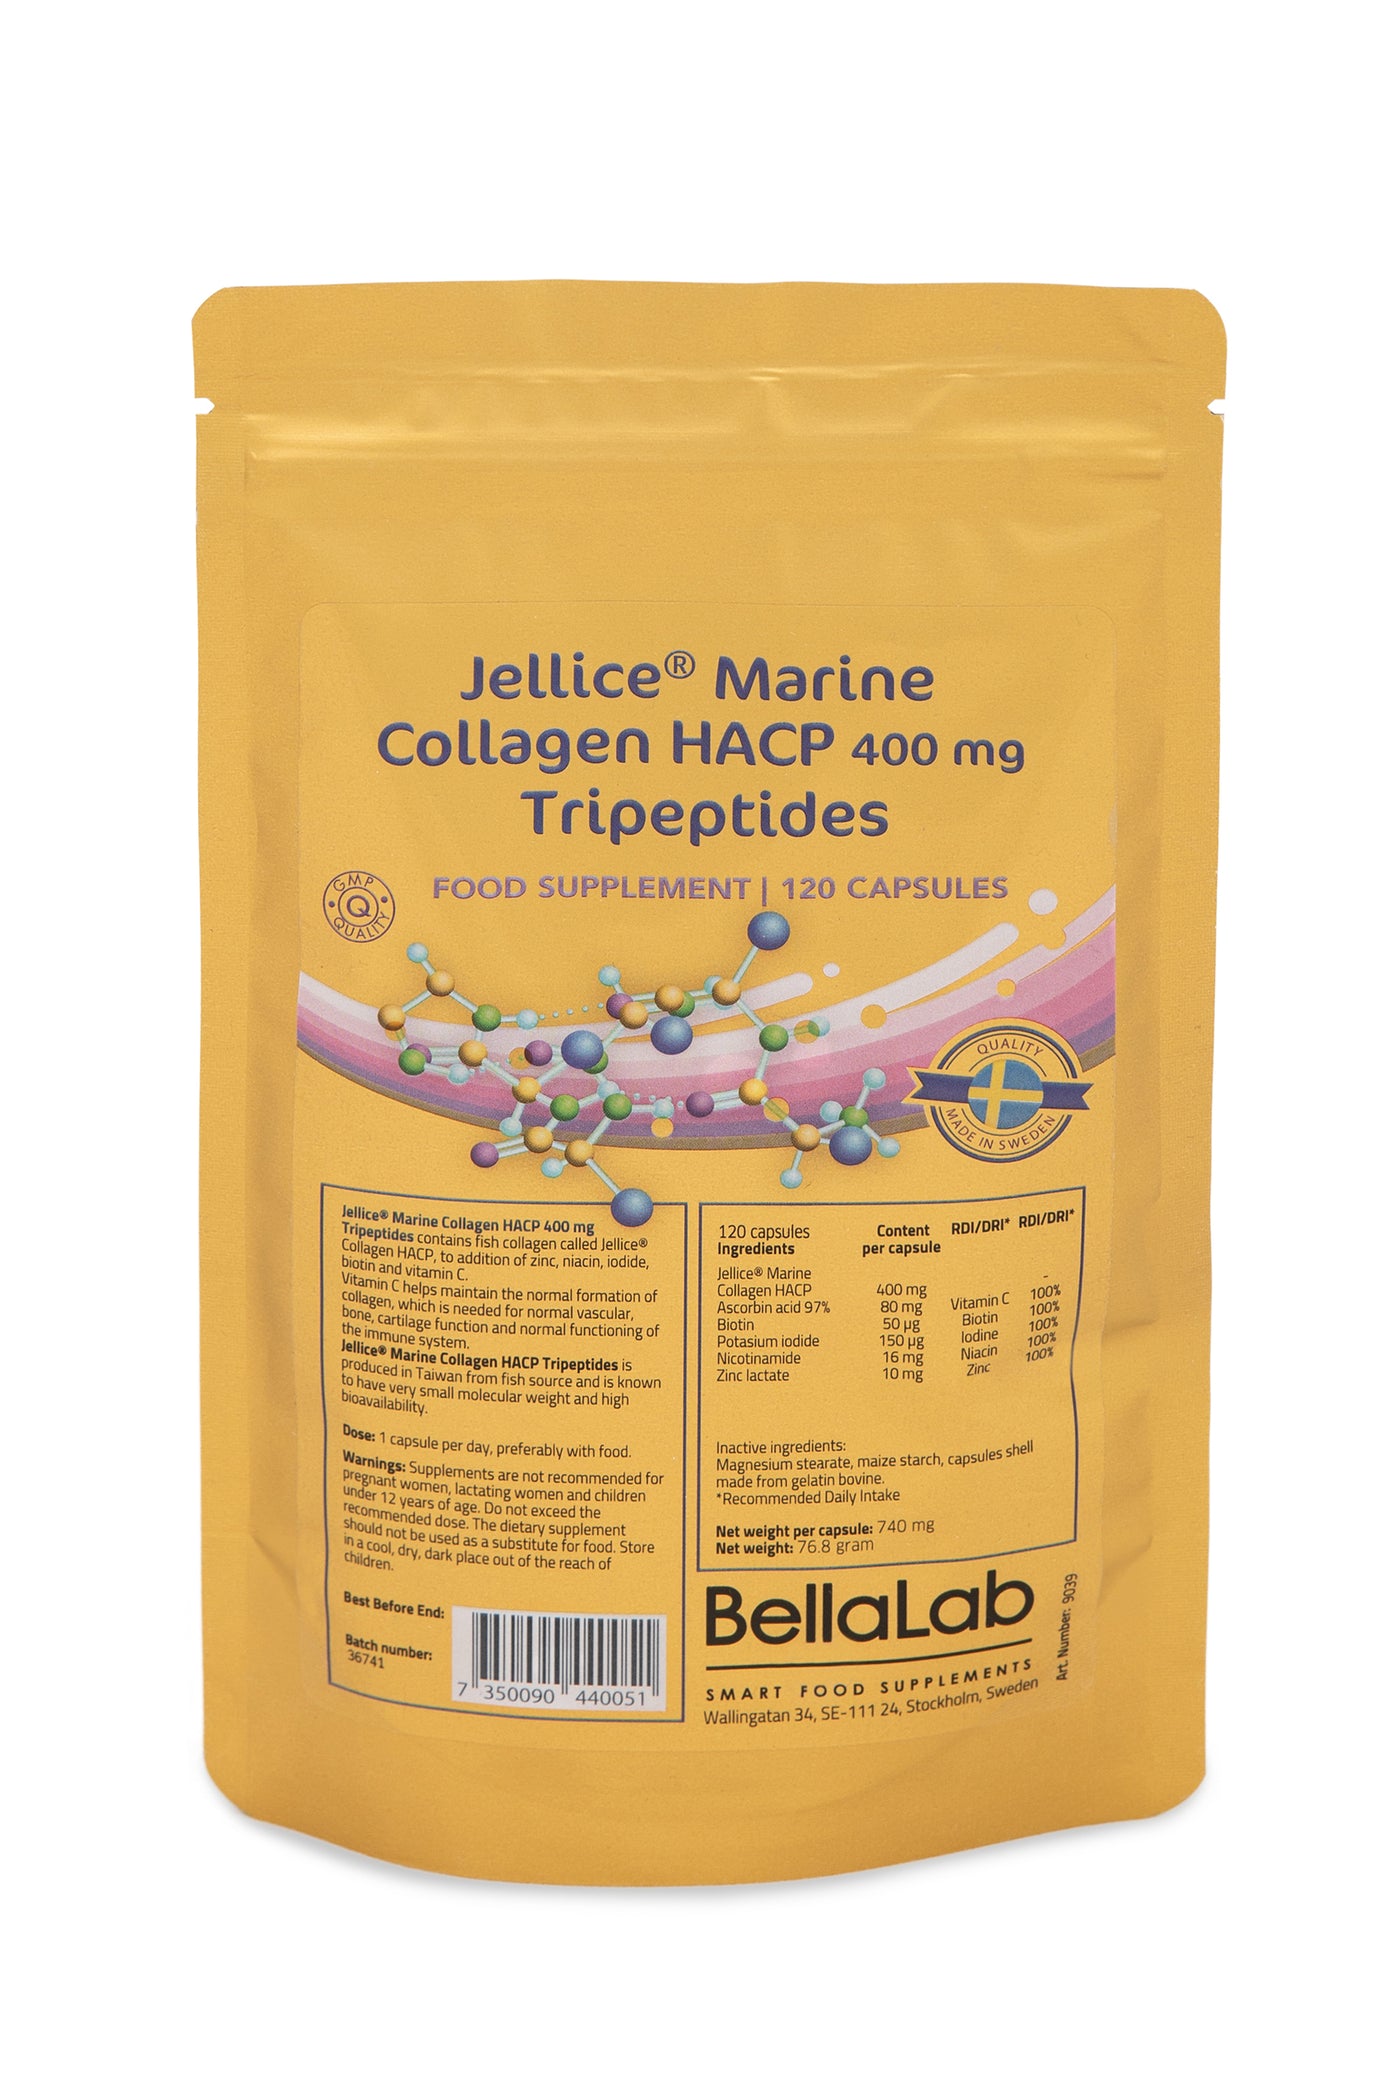 Jellice Marine Collagen HACP